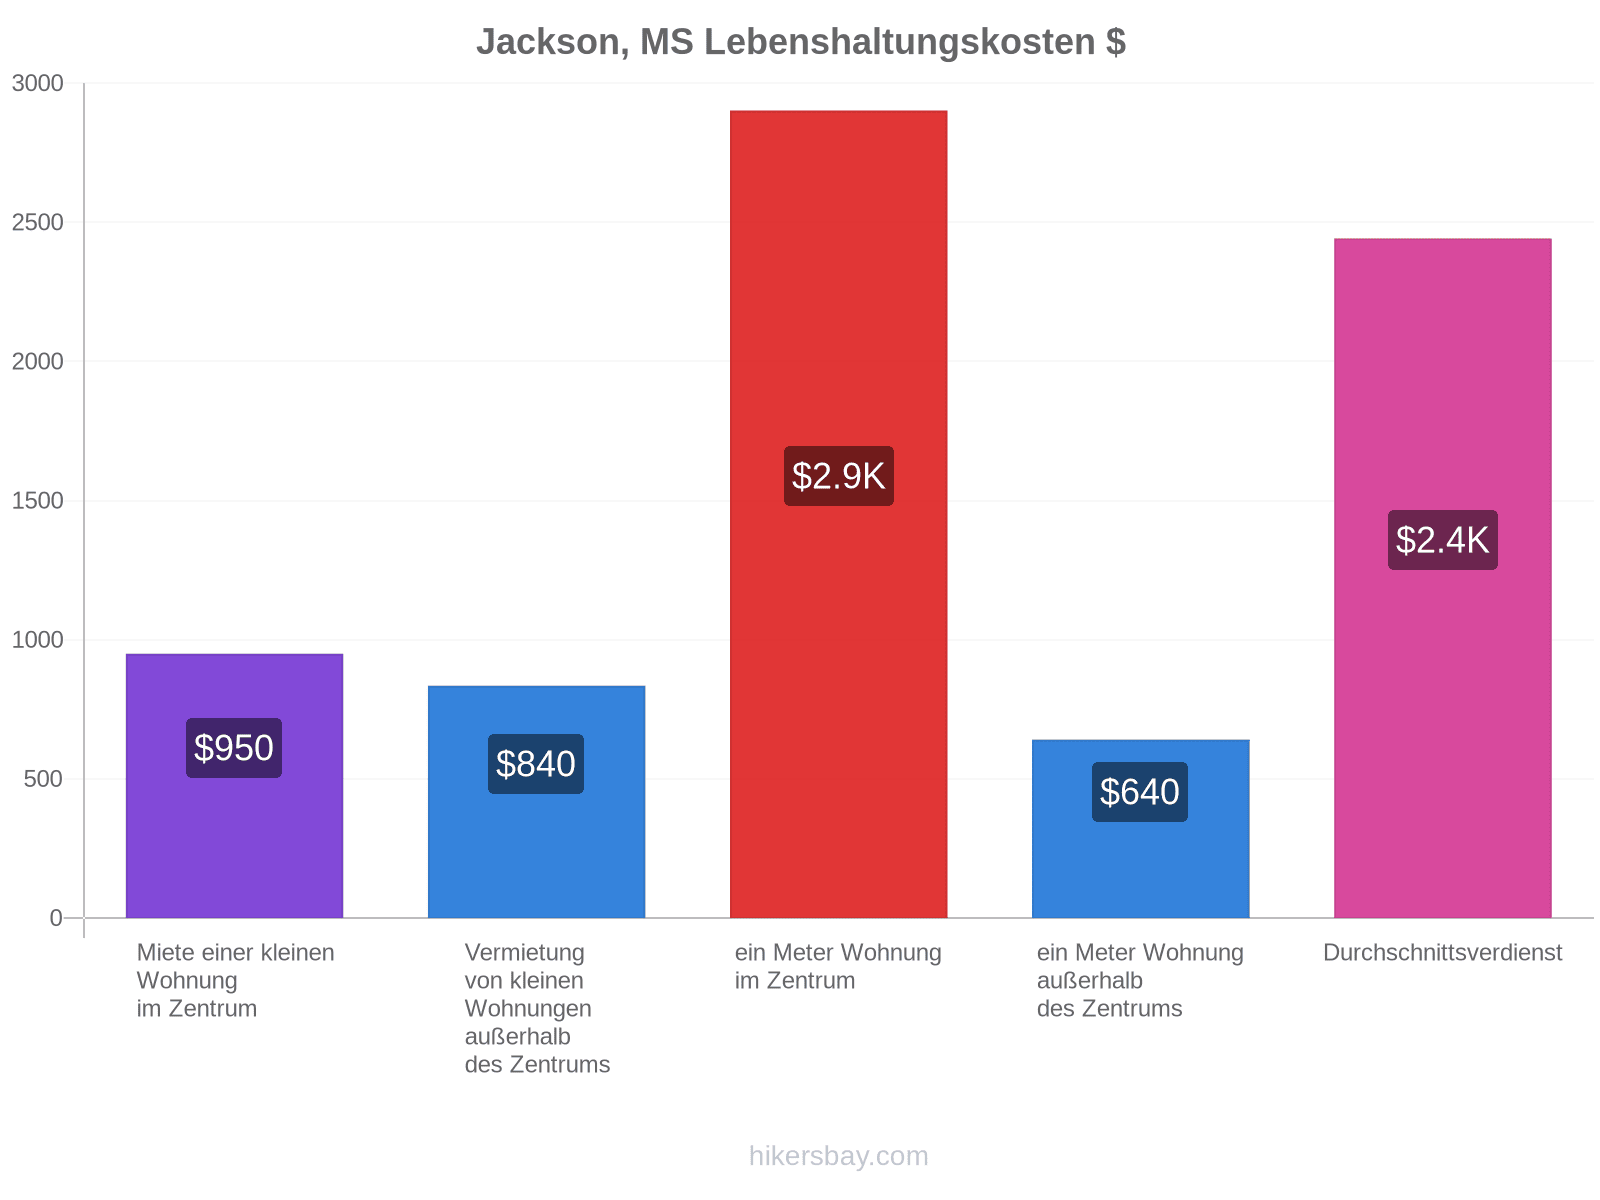 Jackson, MS Lebenshaltungskosten hikersbay.com